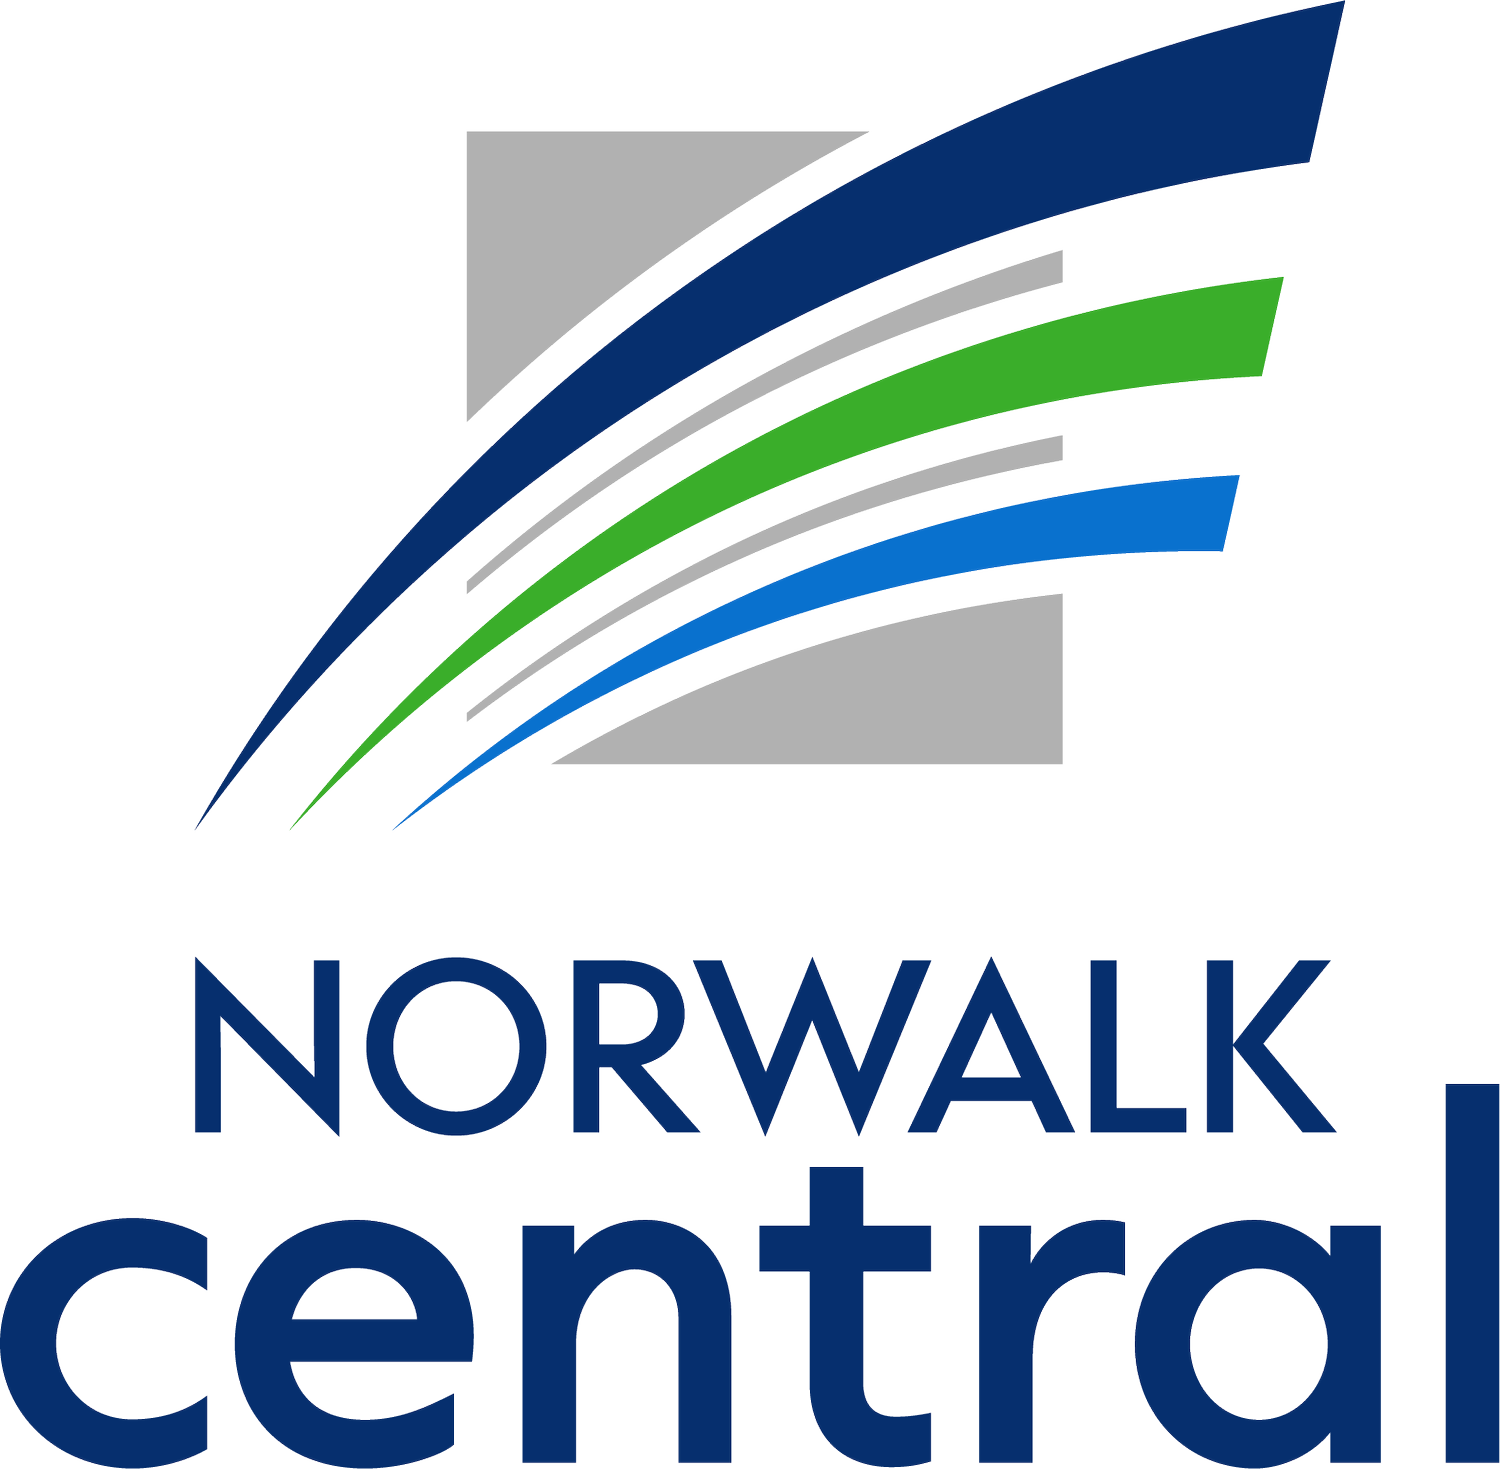 NORWALK CENTRAL